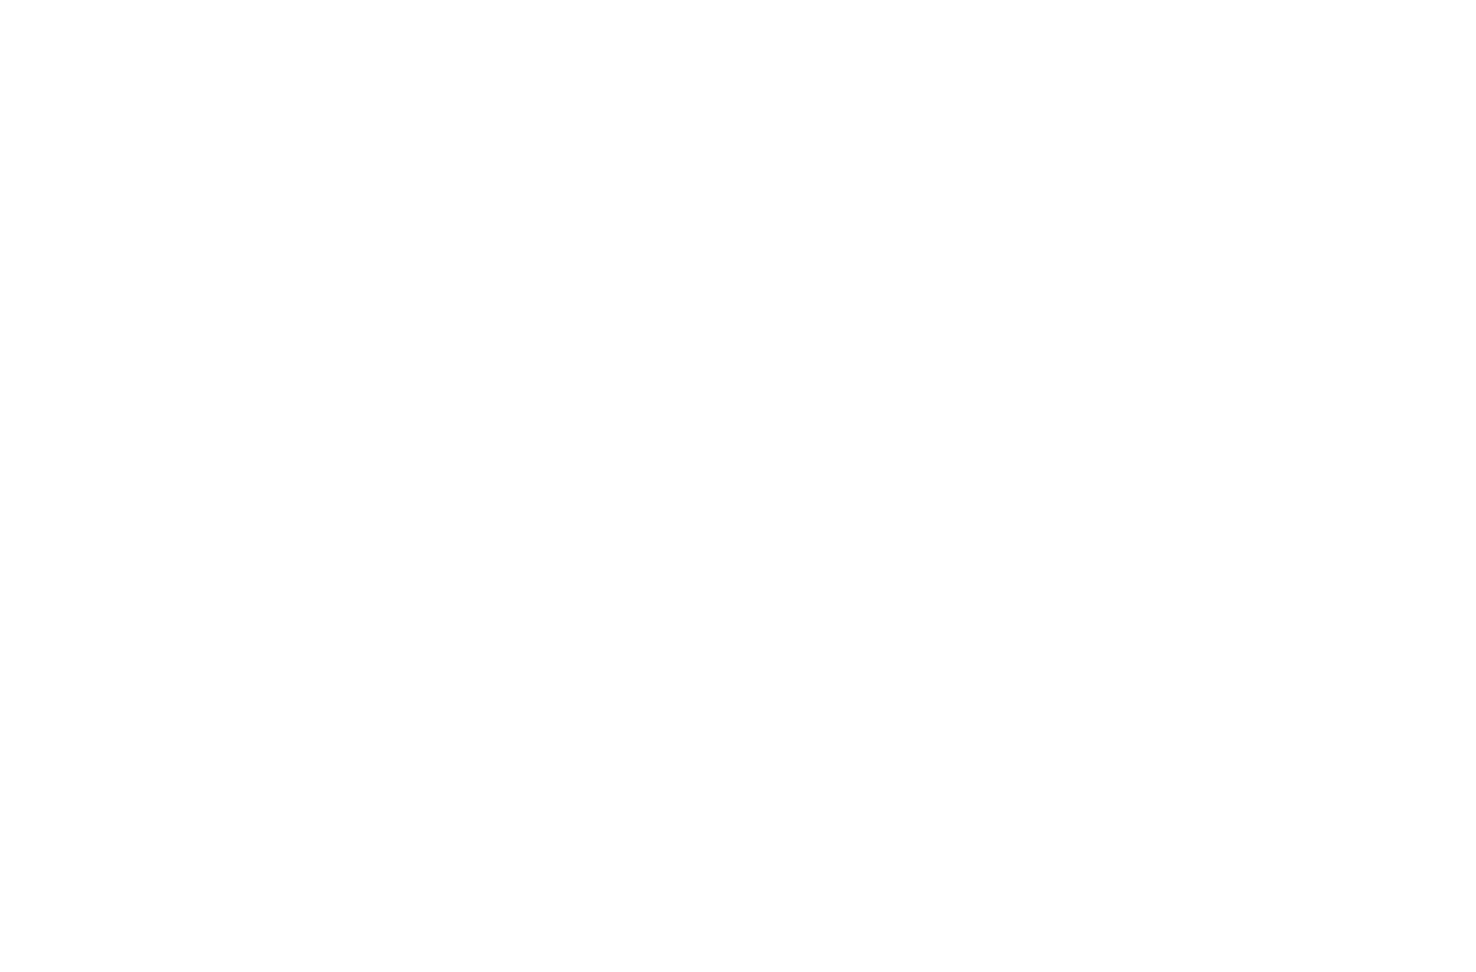 Black Fashion Movement